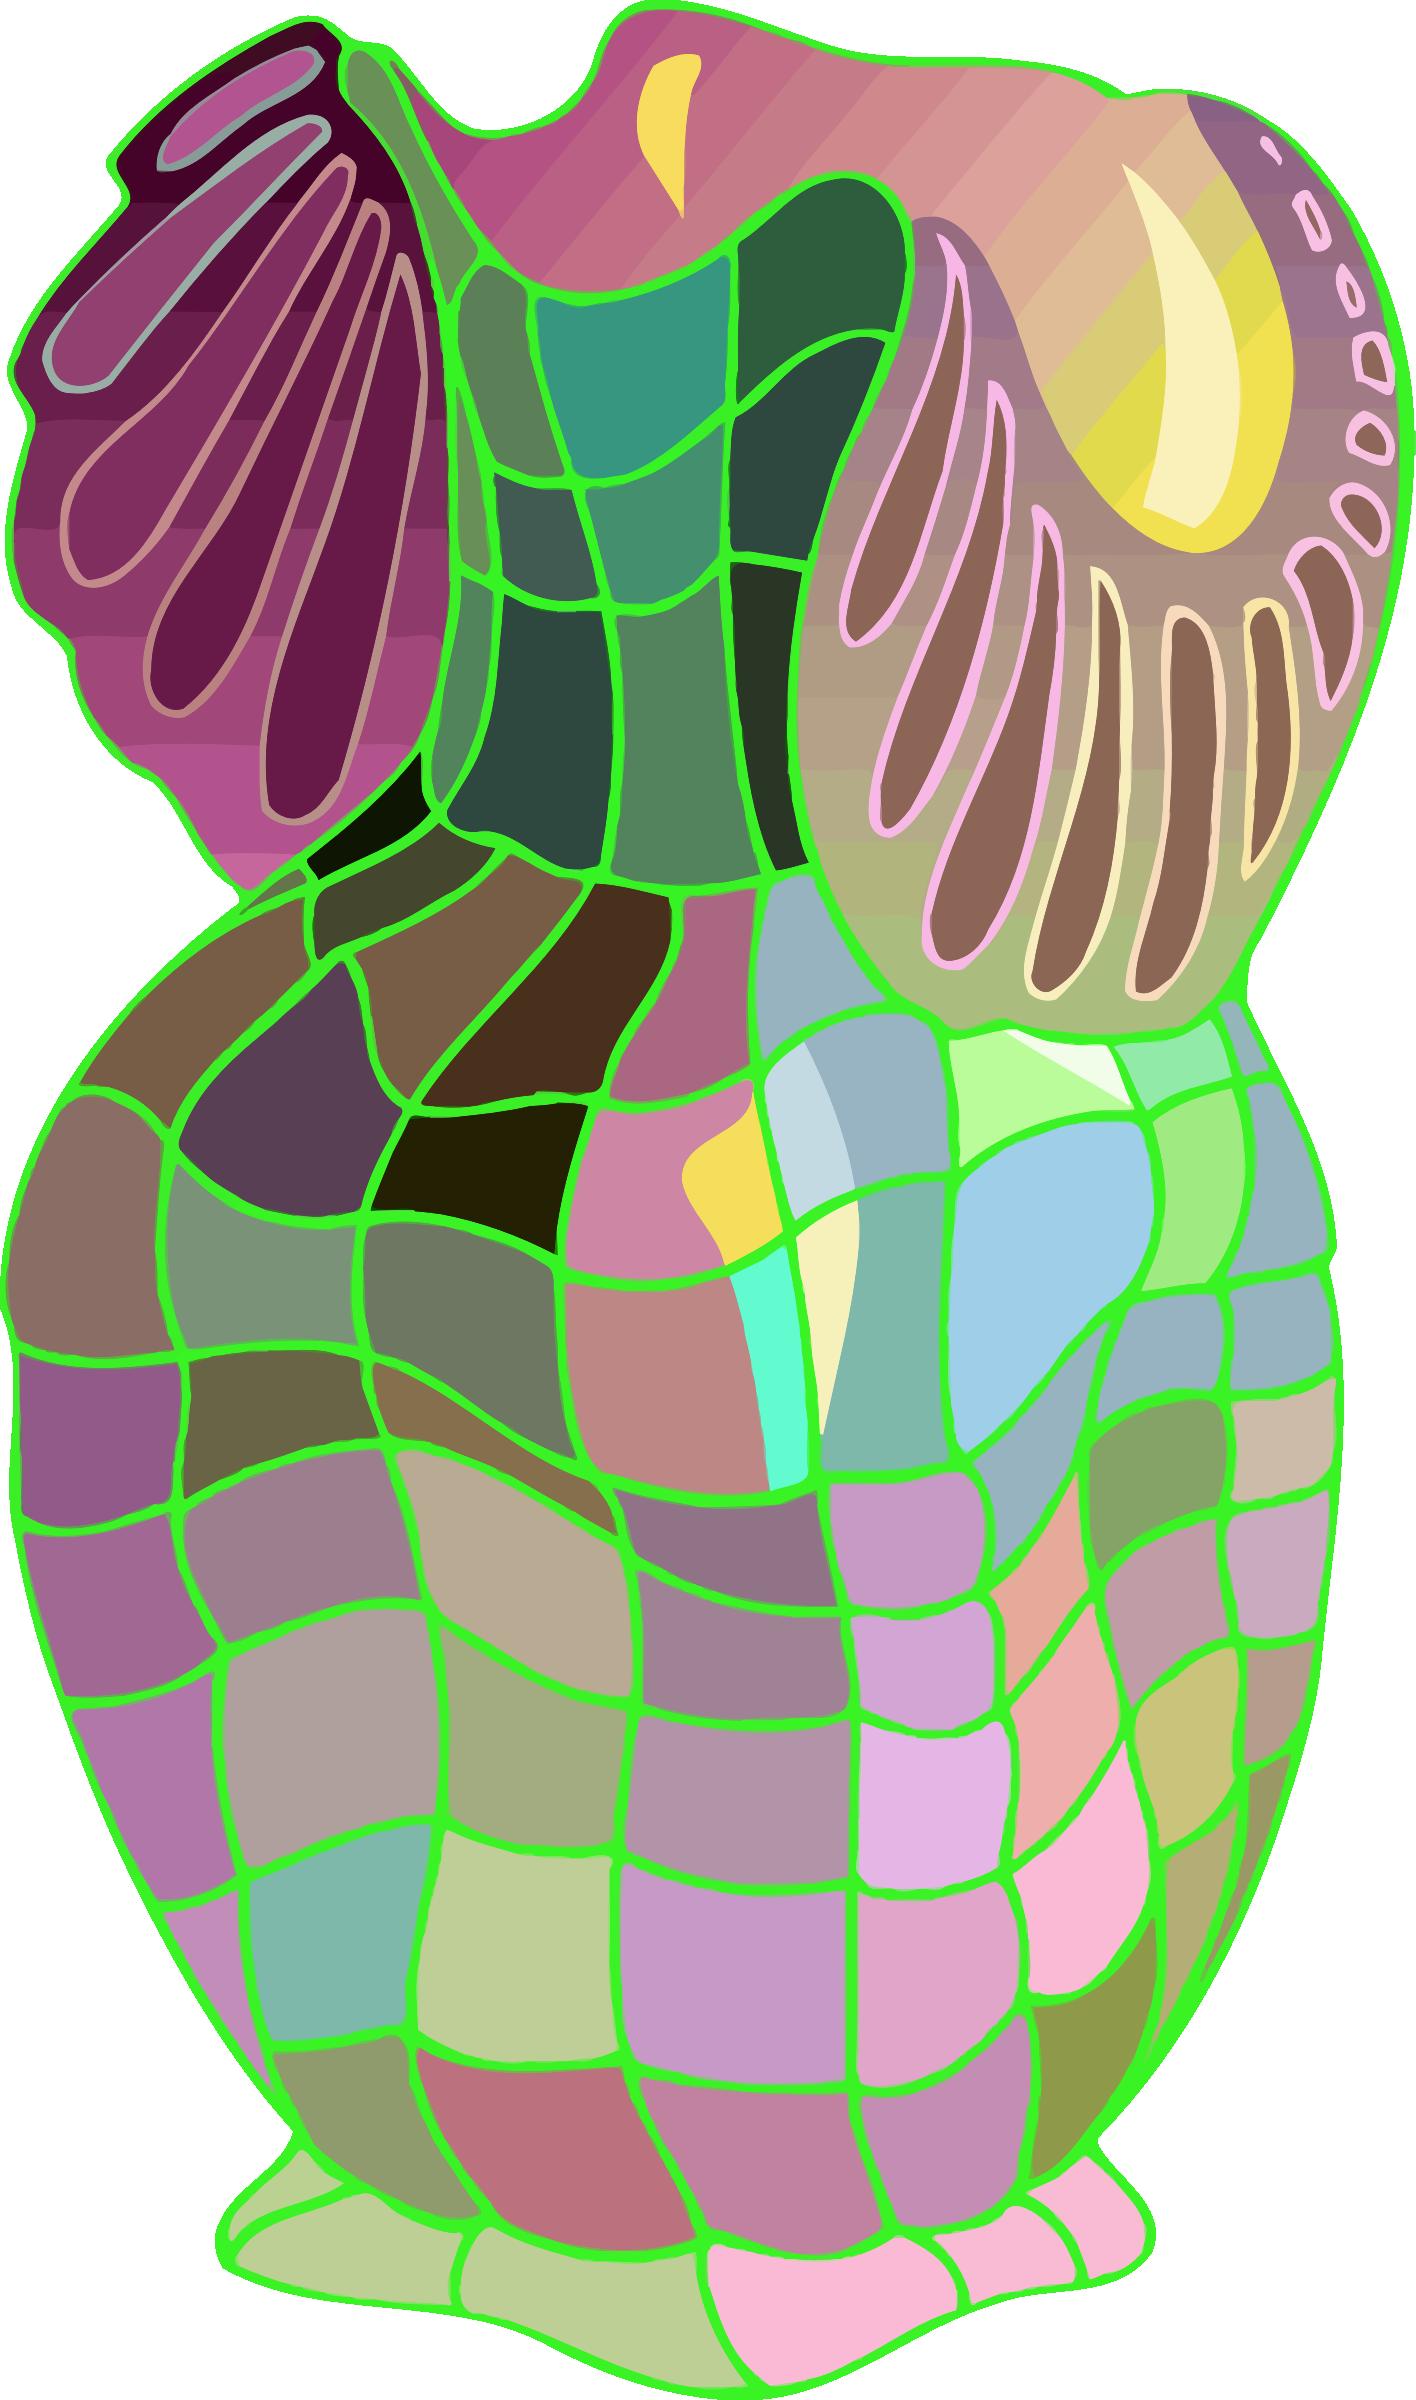 Prismatic vase icons